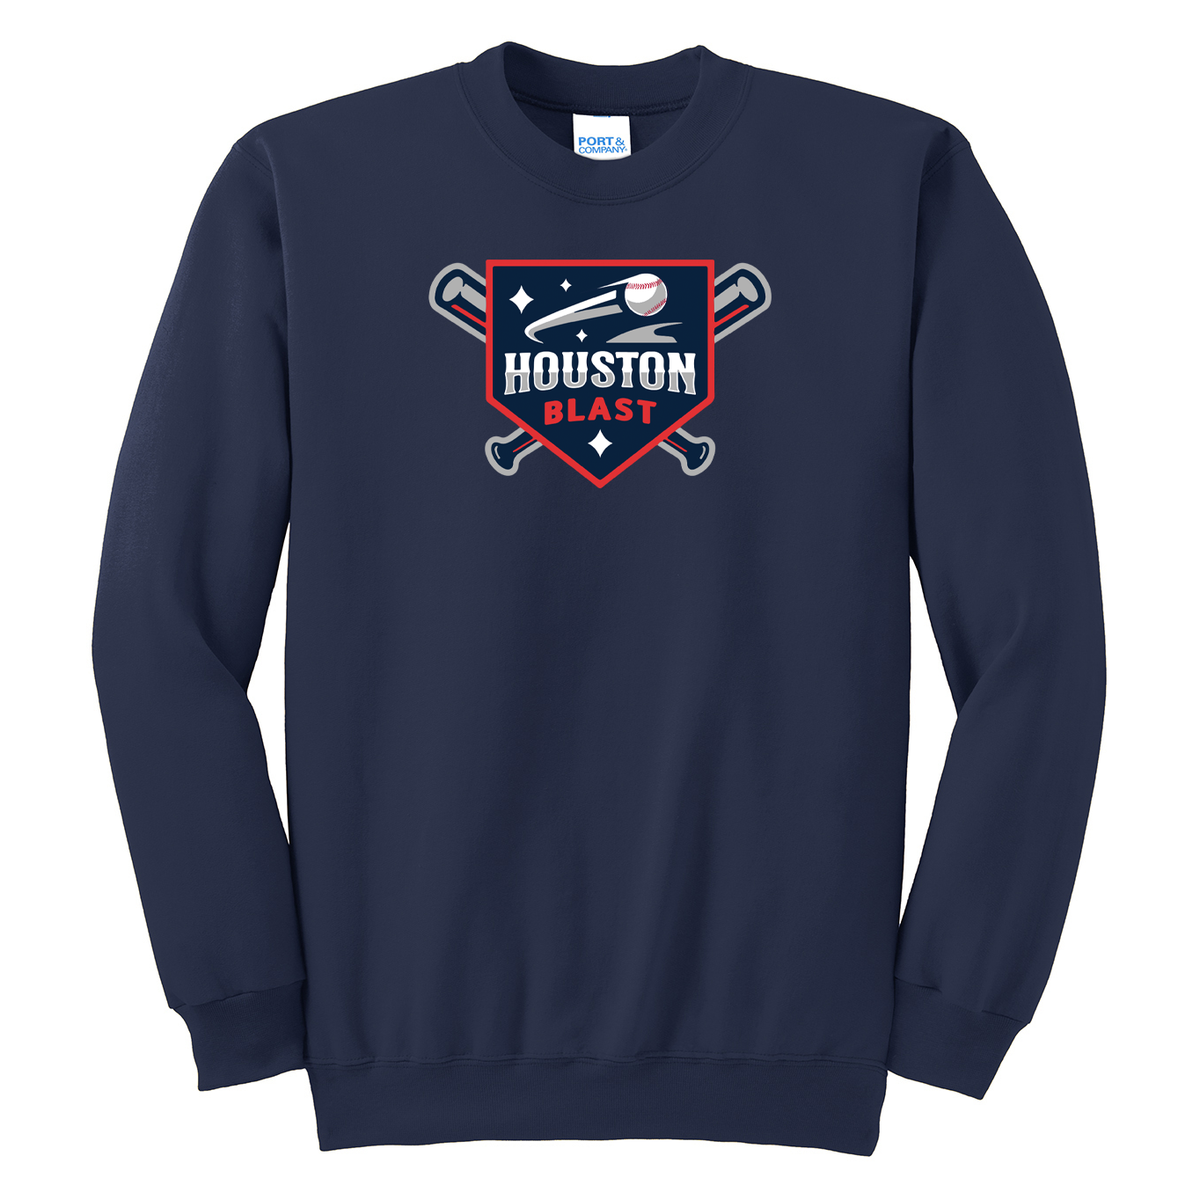 Houston Blast Baseball Crew Neck Sweater